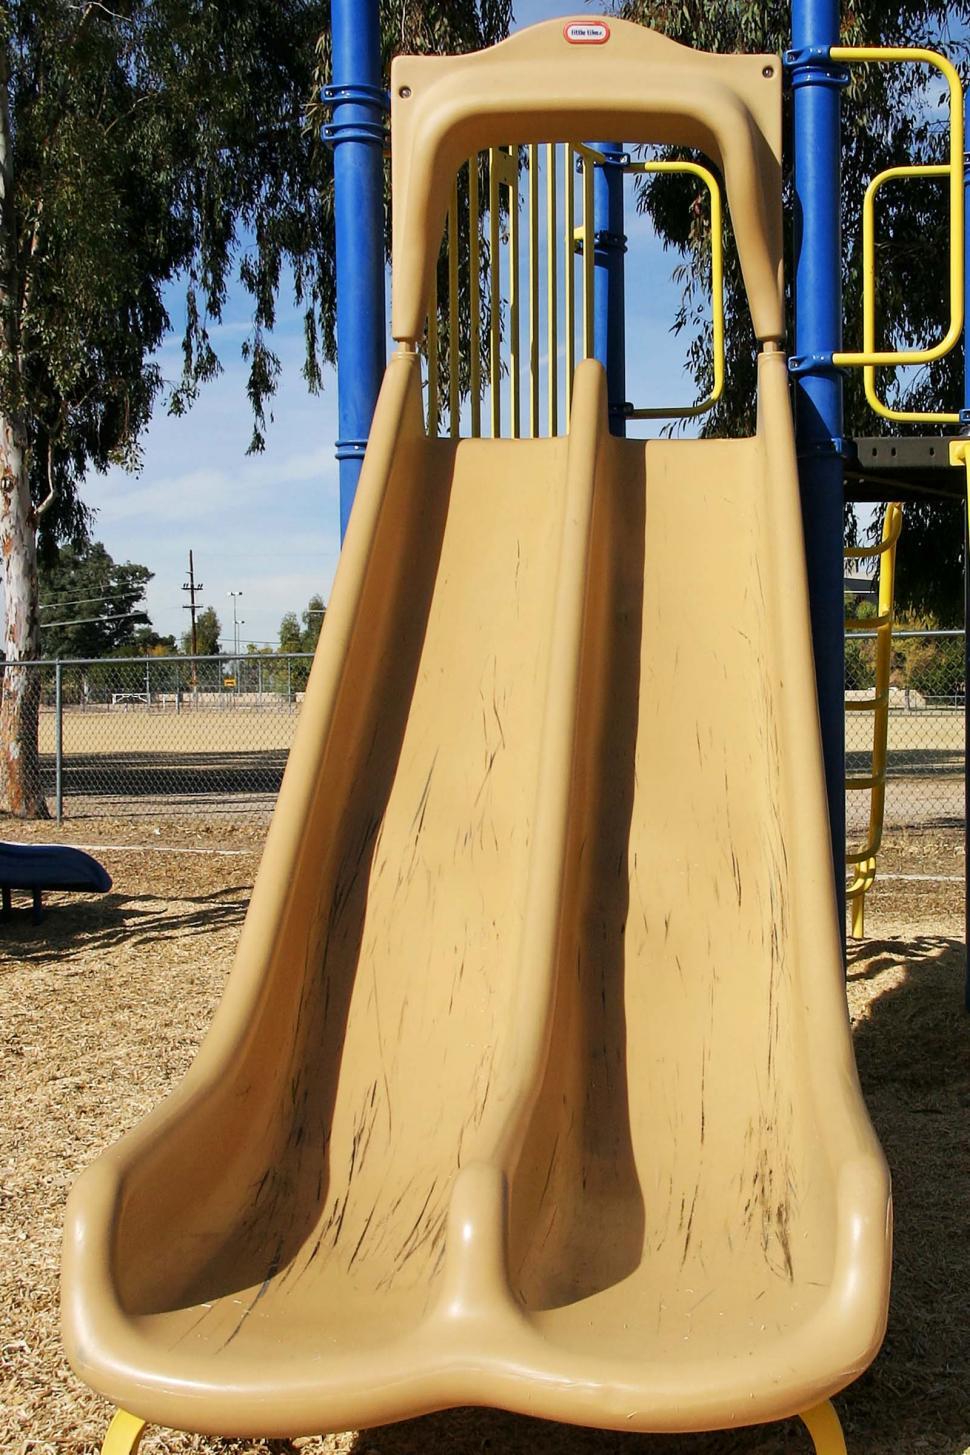 Free Image of playground school slide slides 